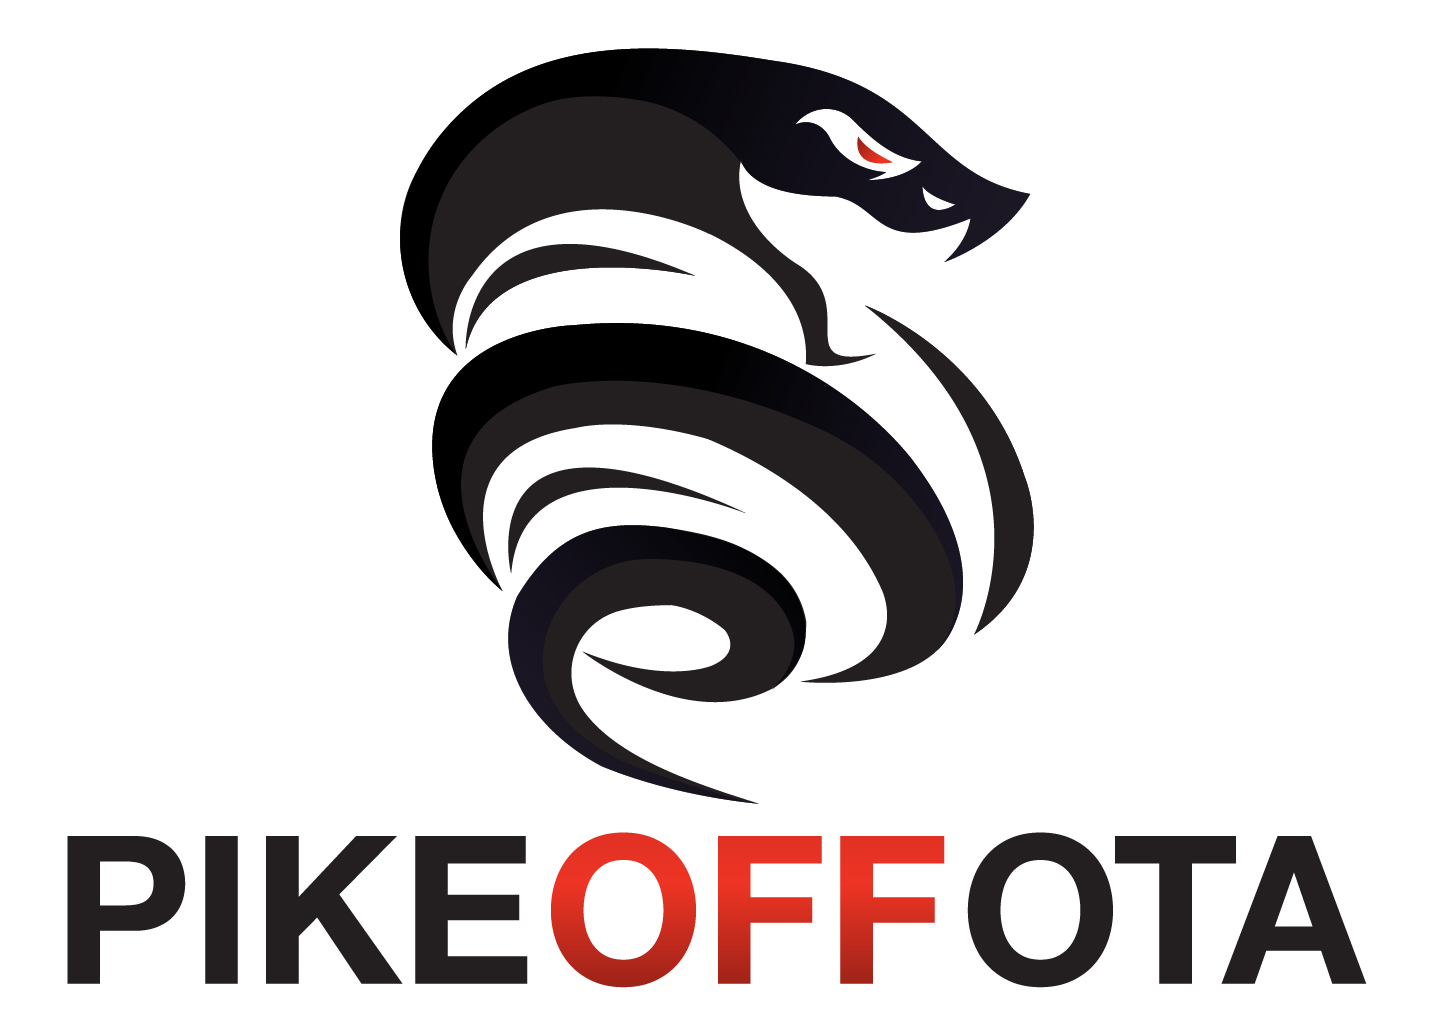 PIKE OFF OTA logo